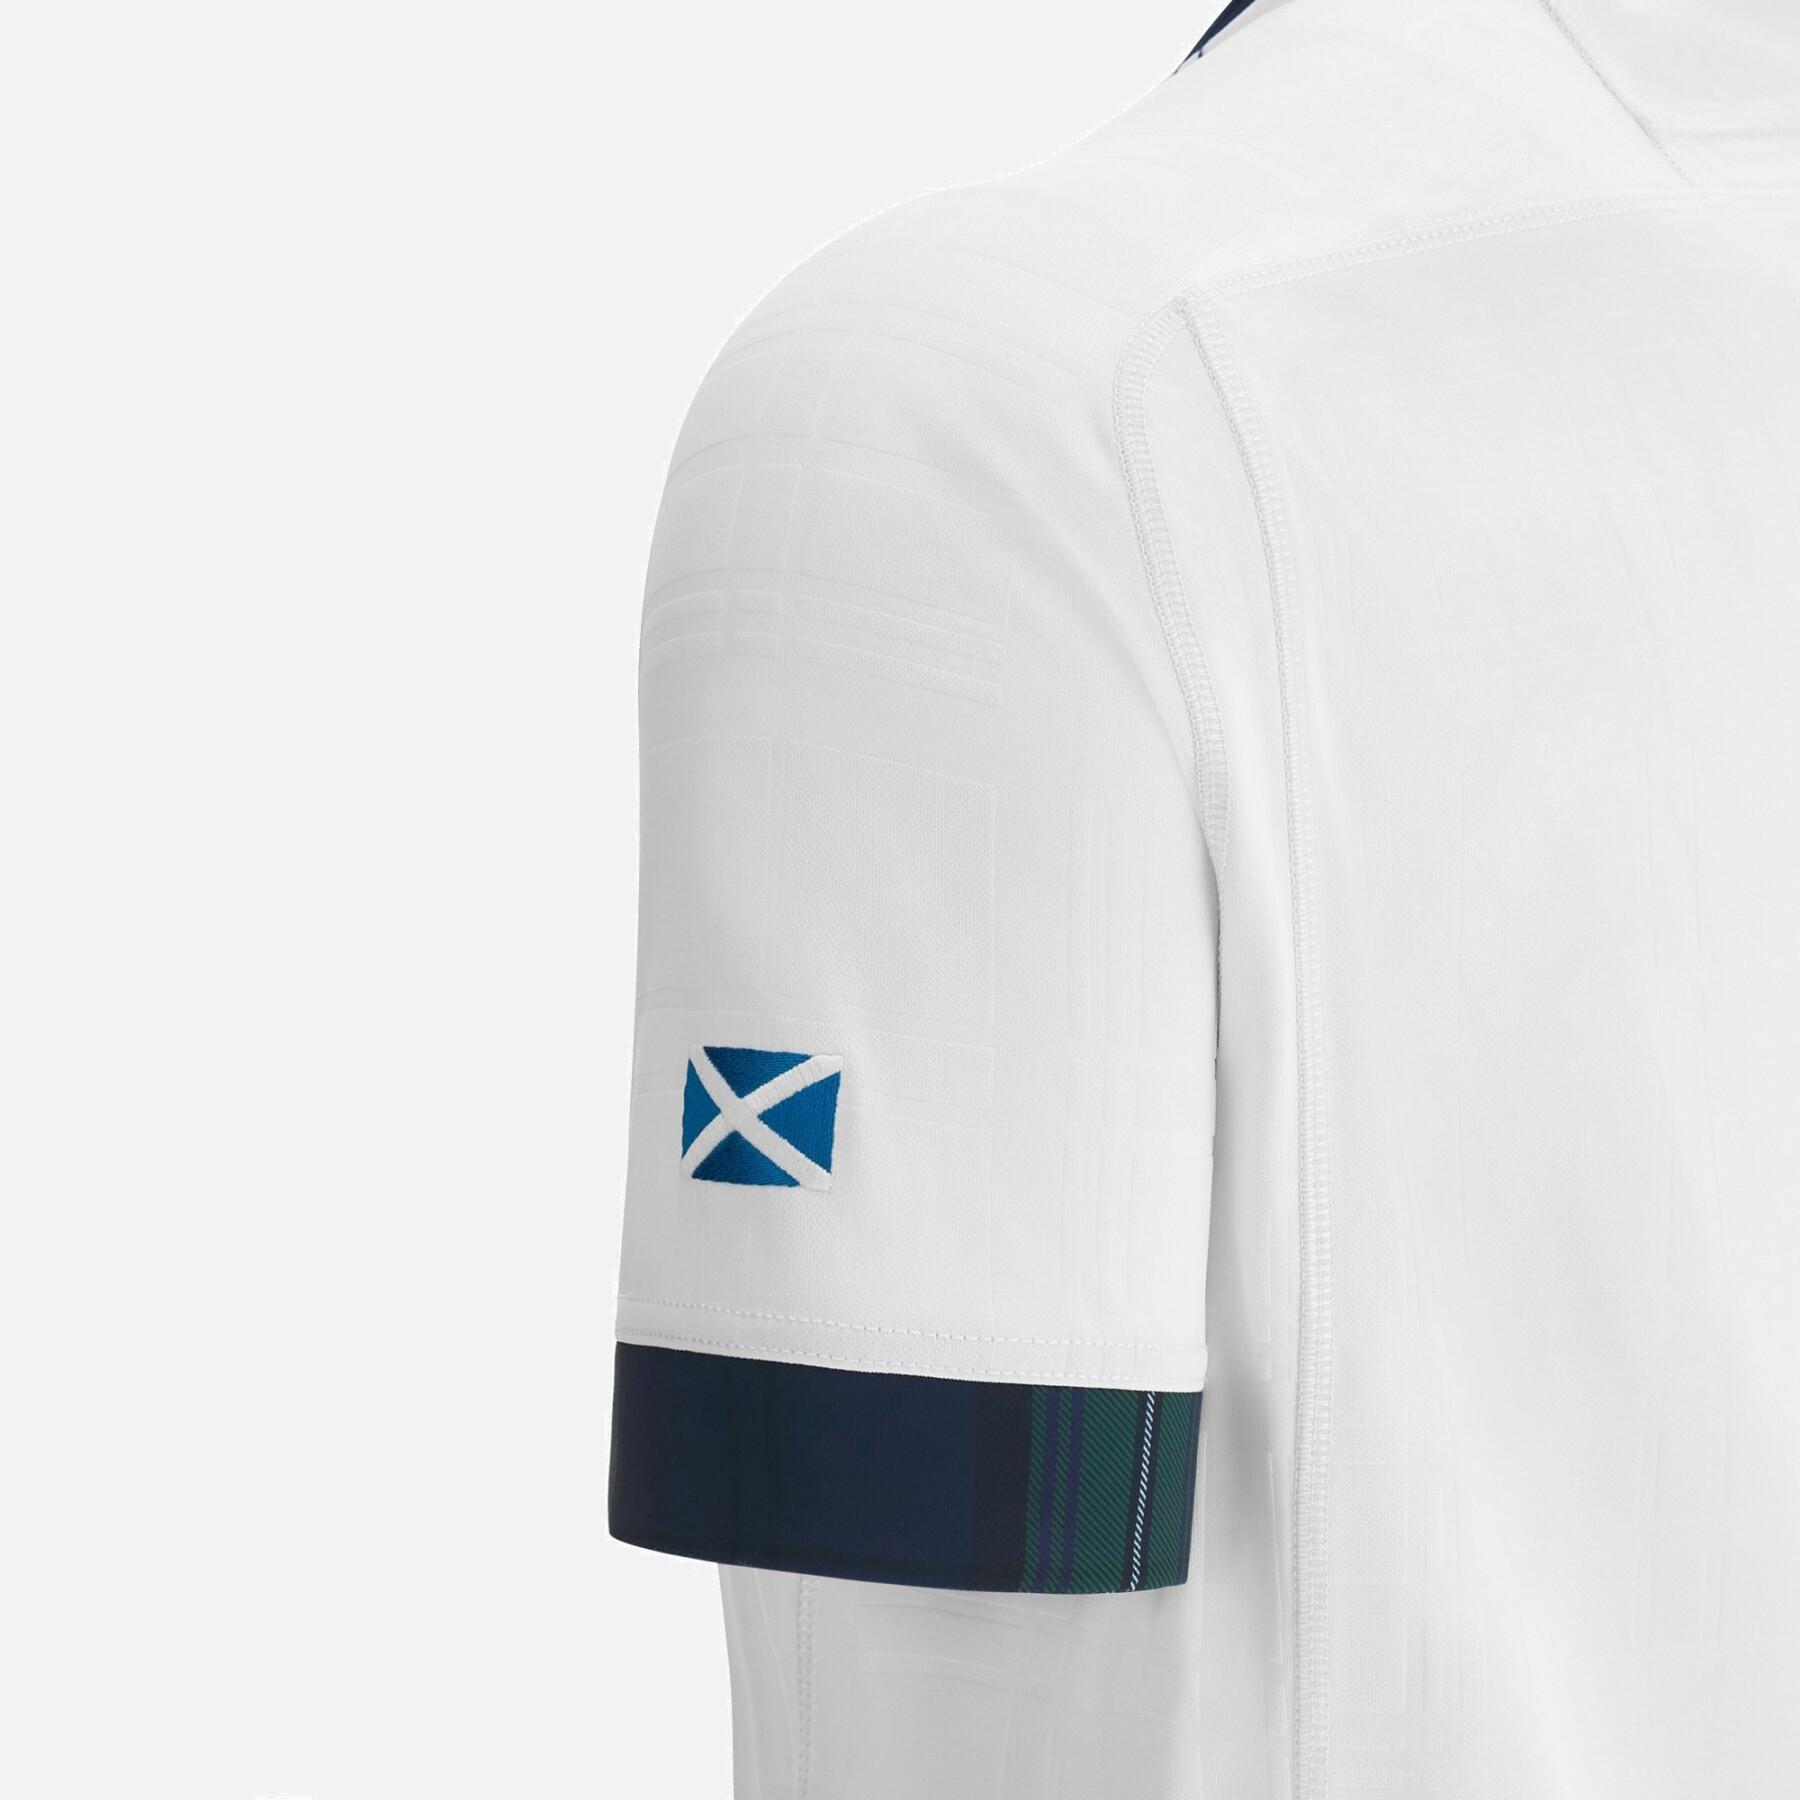 Children's away jersey Scotland RWC 2023